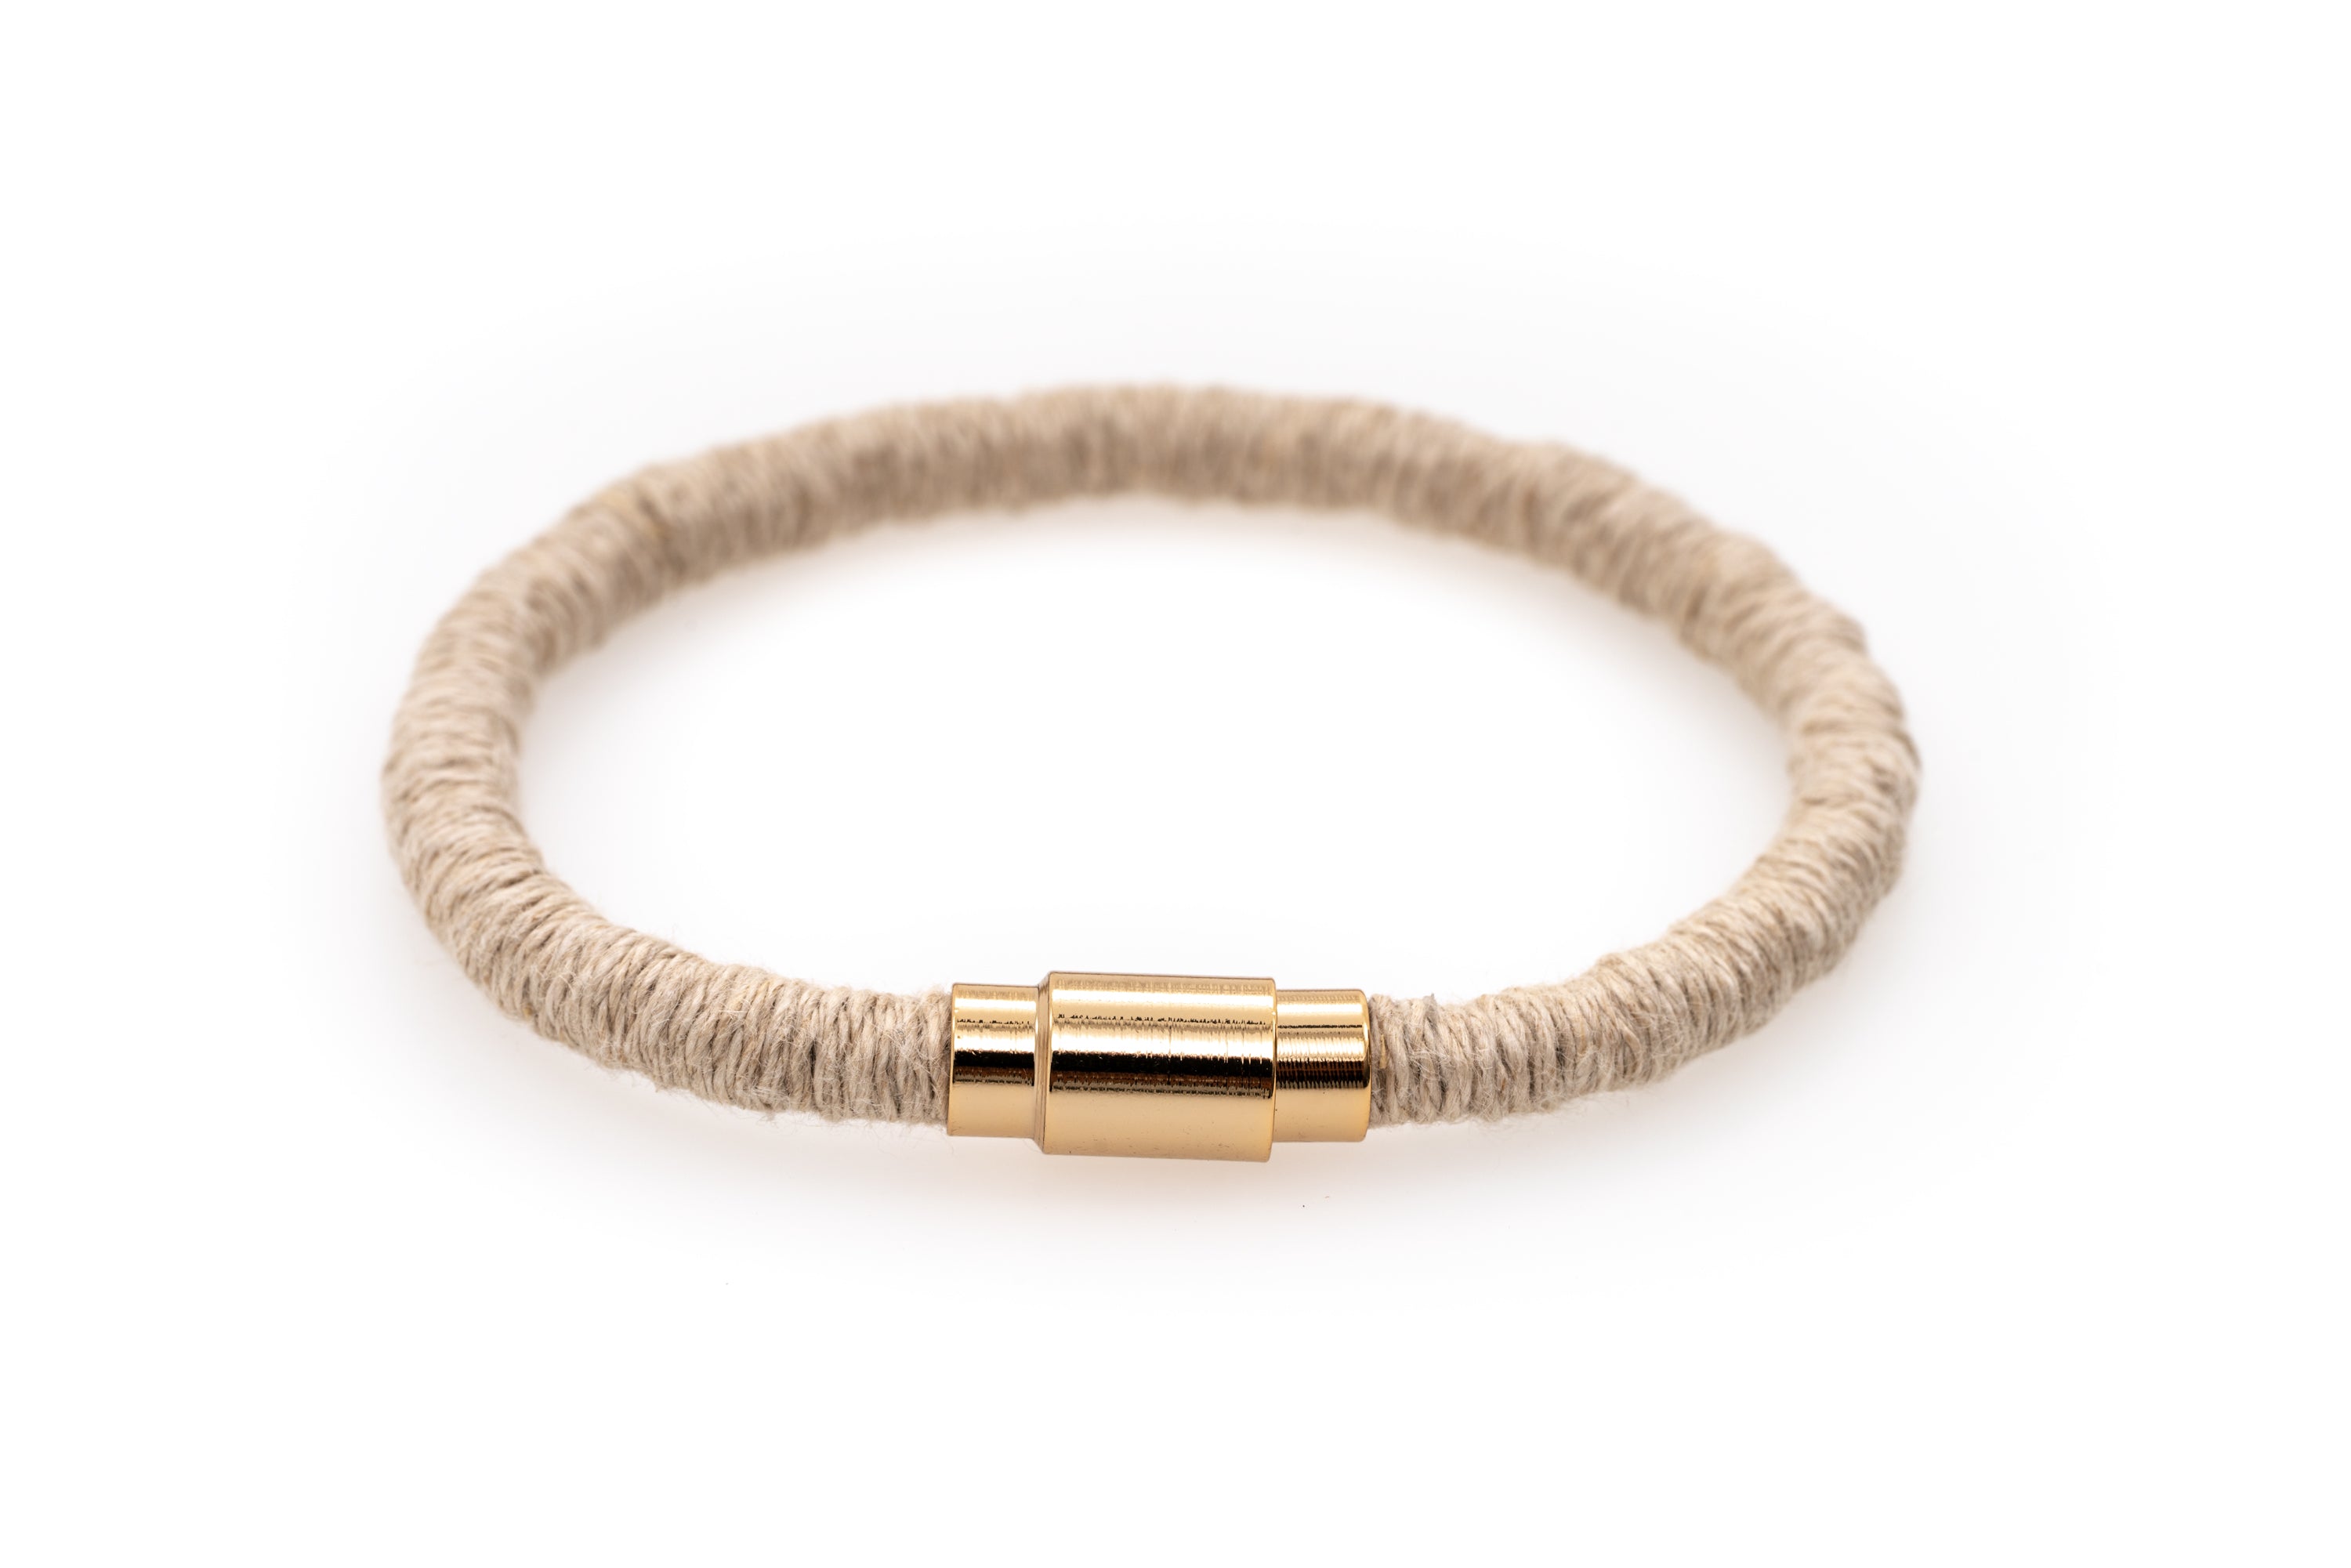 Fiber Art Jewelry Hemp Wrapped Bracelet Size S - Natural / Gold Plated Magnet